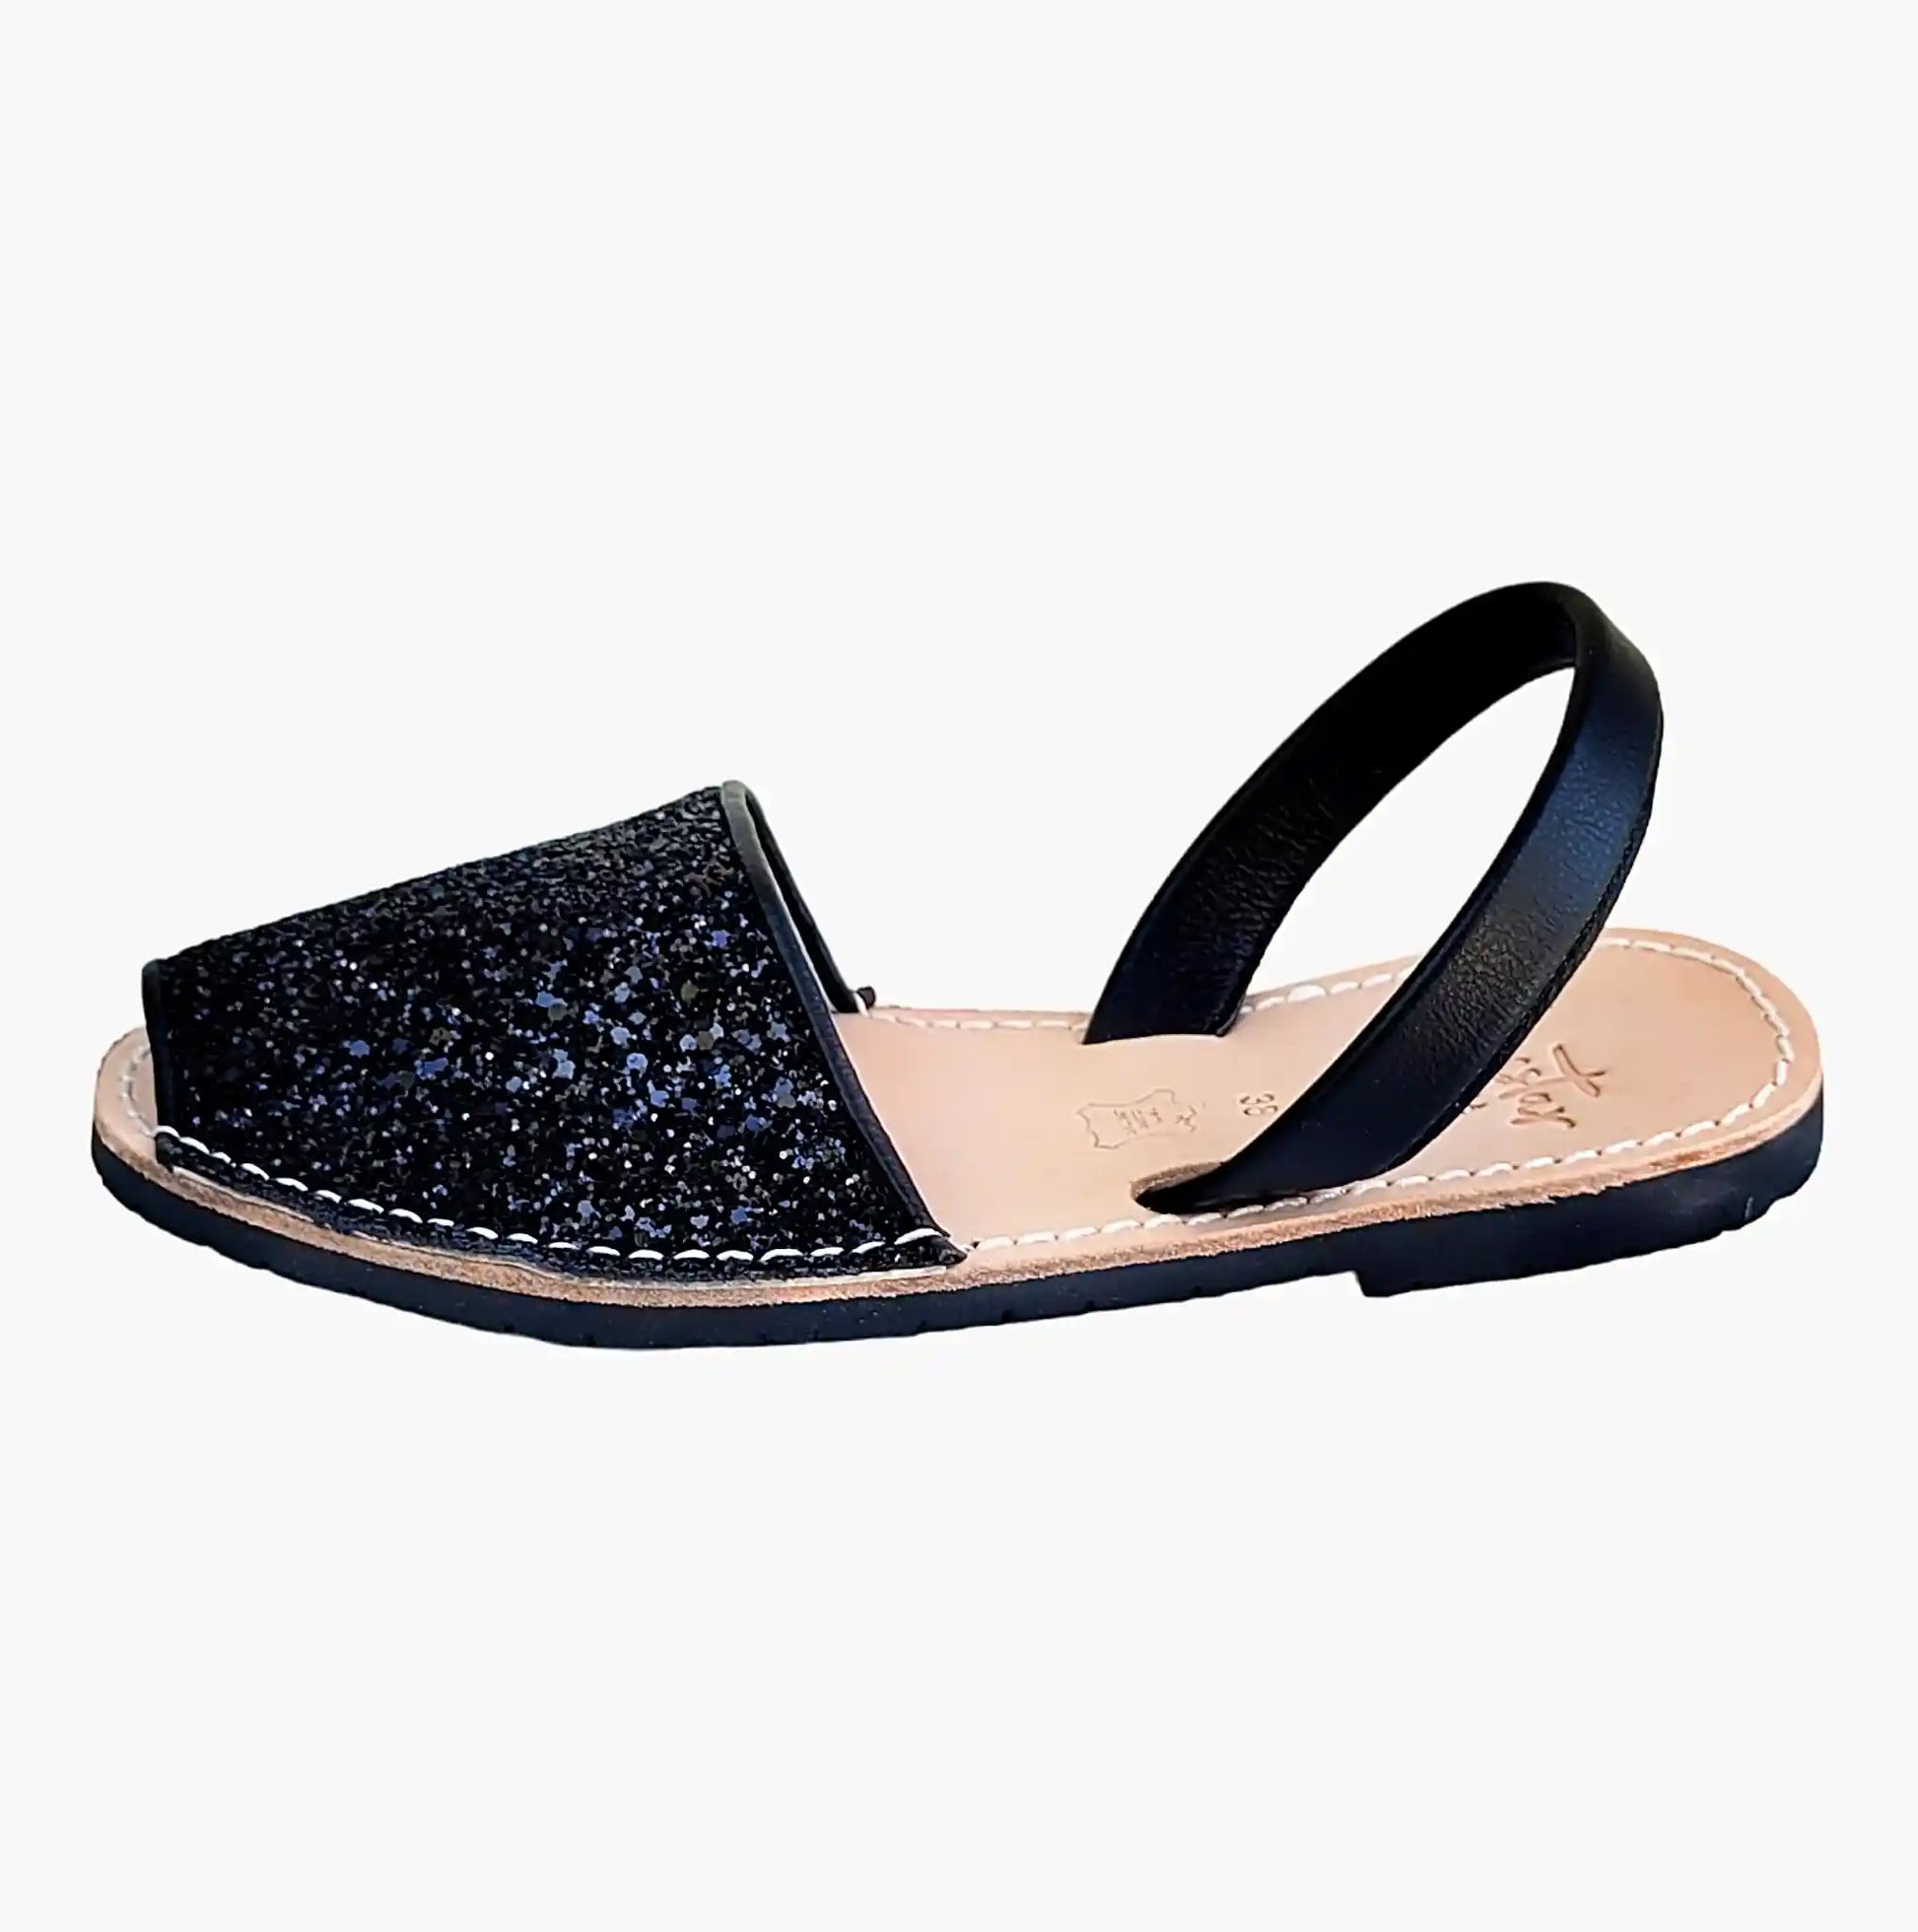 Avarcas-Black-Glitter-Sandals-side-view